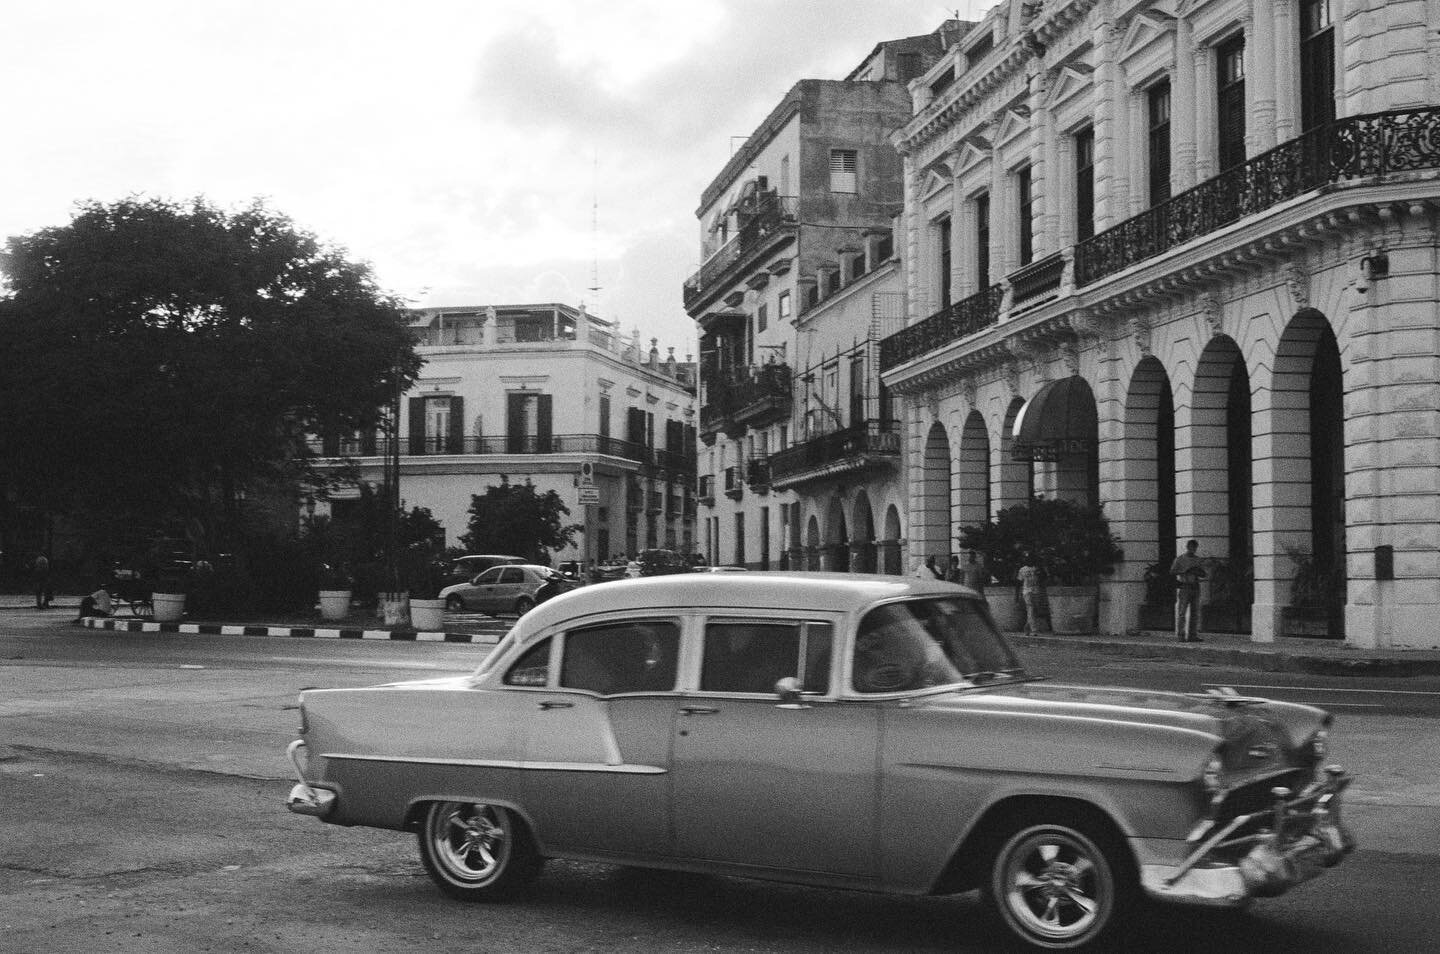 Somethings never go out of style 
Cuba, 2019 
&bull;
&bull;
&bull;
&bull;
&bull;
#bink #adventure #cuba #film #havana #filmphotography #filmisnotdead #35mm #analog #movie #ishootfilm #habana  #cuban #filmcamera #lahabana #believeinfilm #filmcommunity